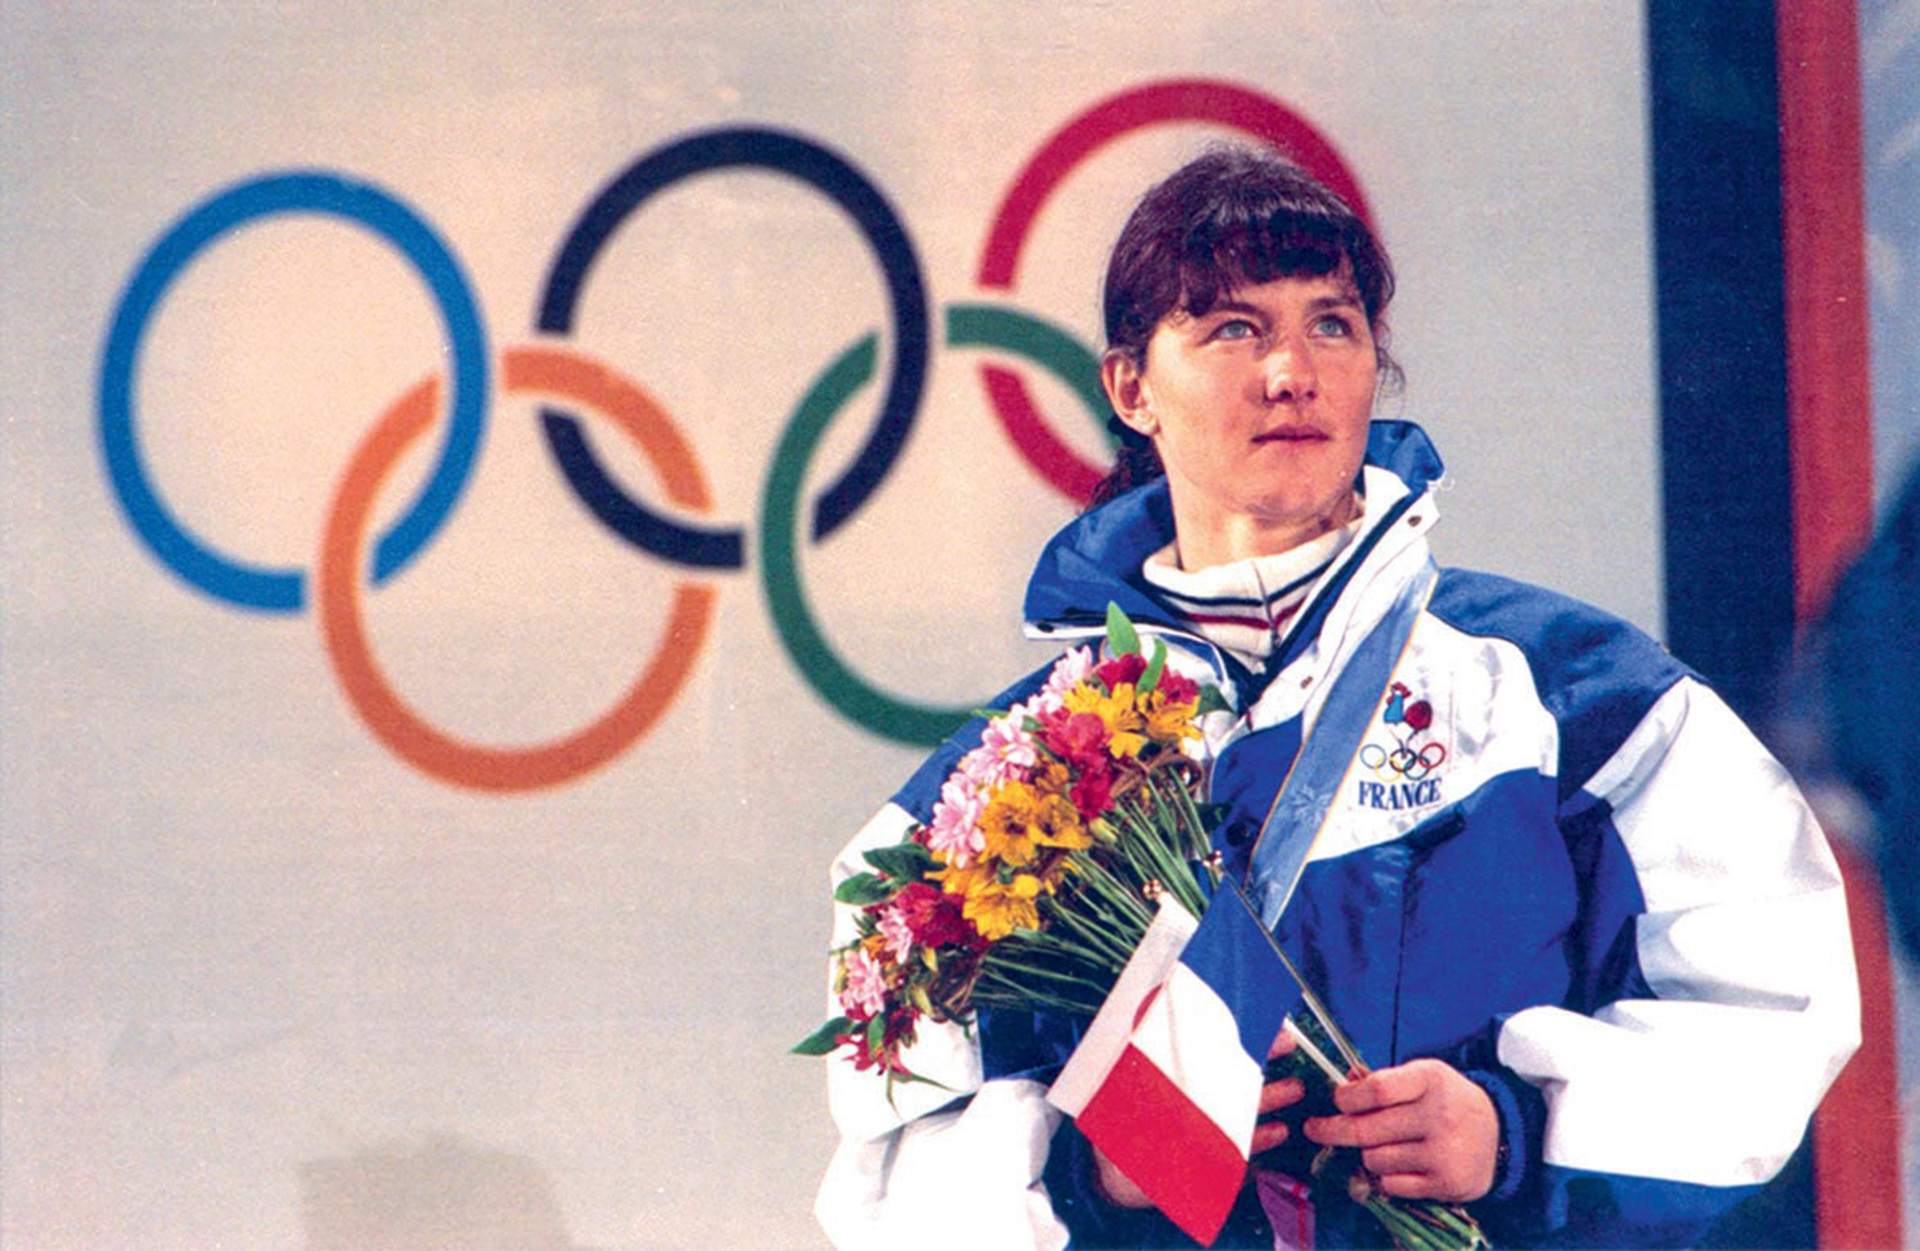 Chamrousse champion florence masnada winter olympic games 1992 1998 alpine ski mountain ski resort isere french alps france - © Chappaz Sylvie - CIO